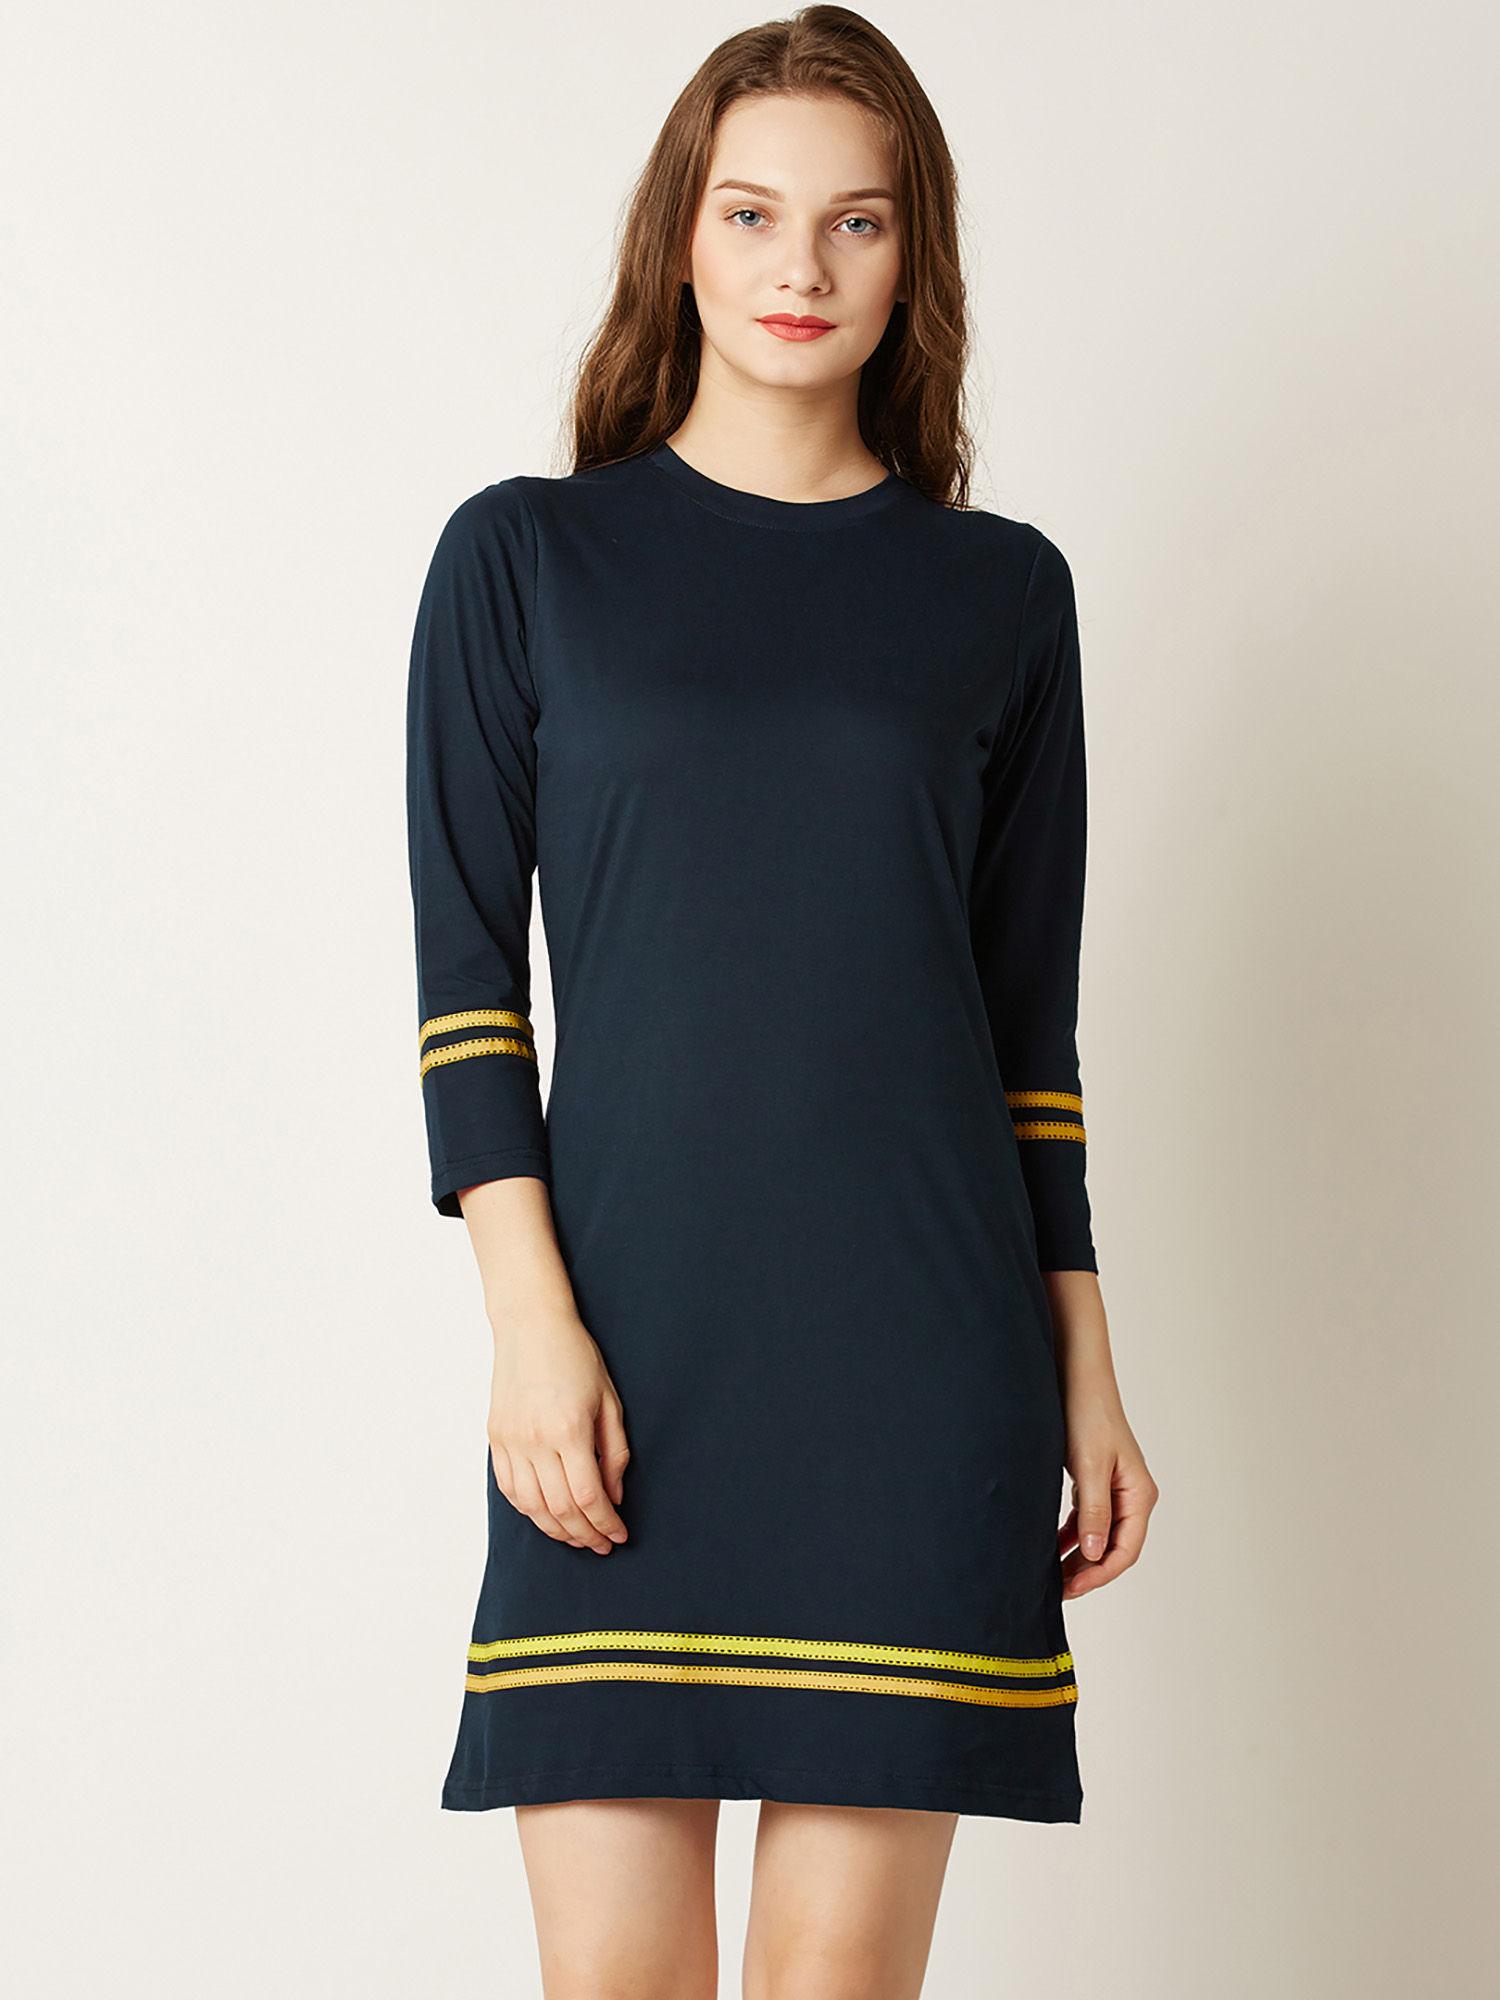 navy blue solid dress